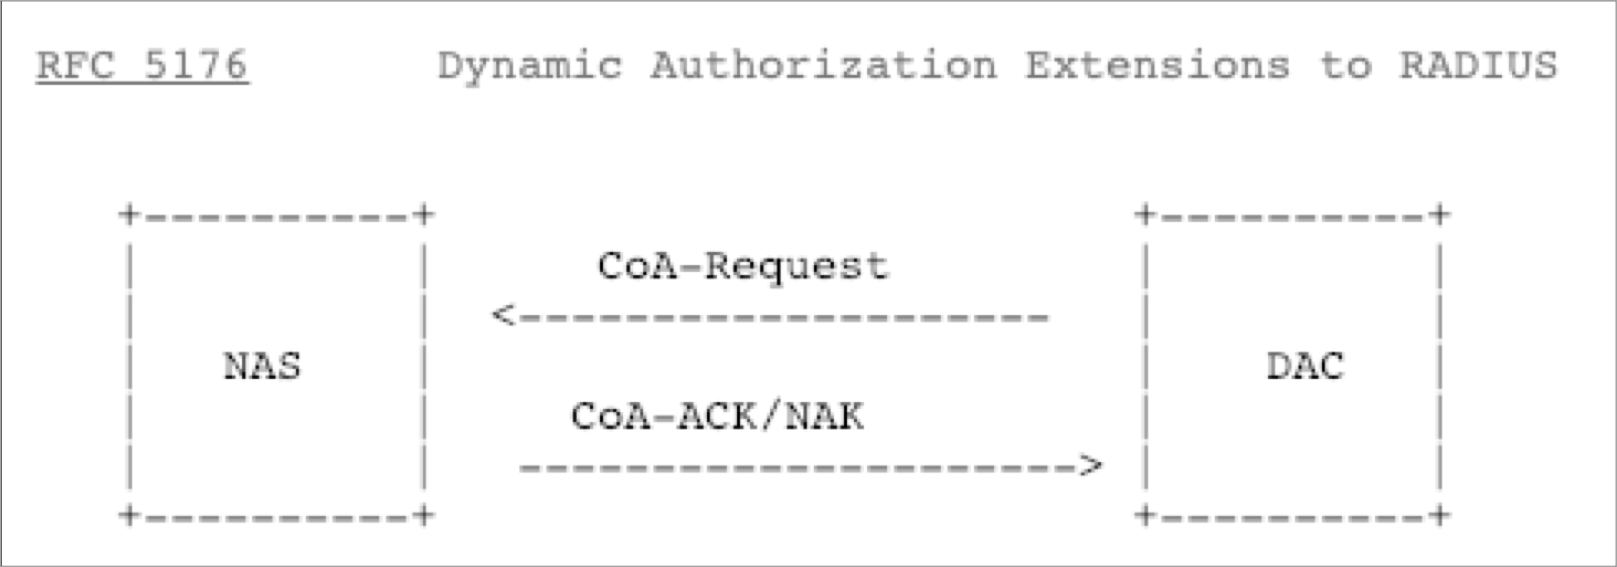 CoA-Request and CoA-ACK/NAK